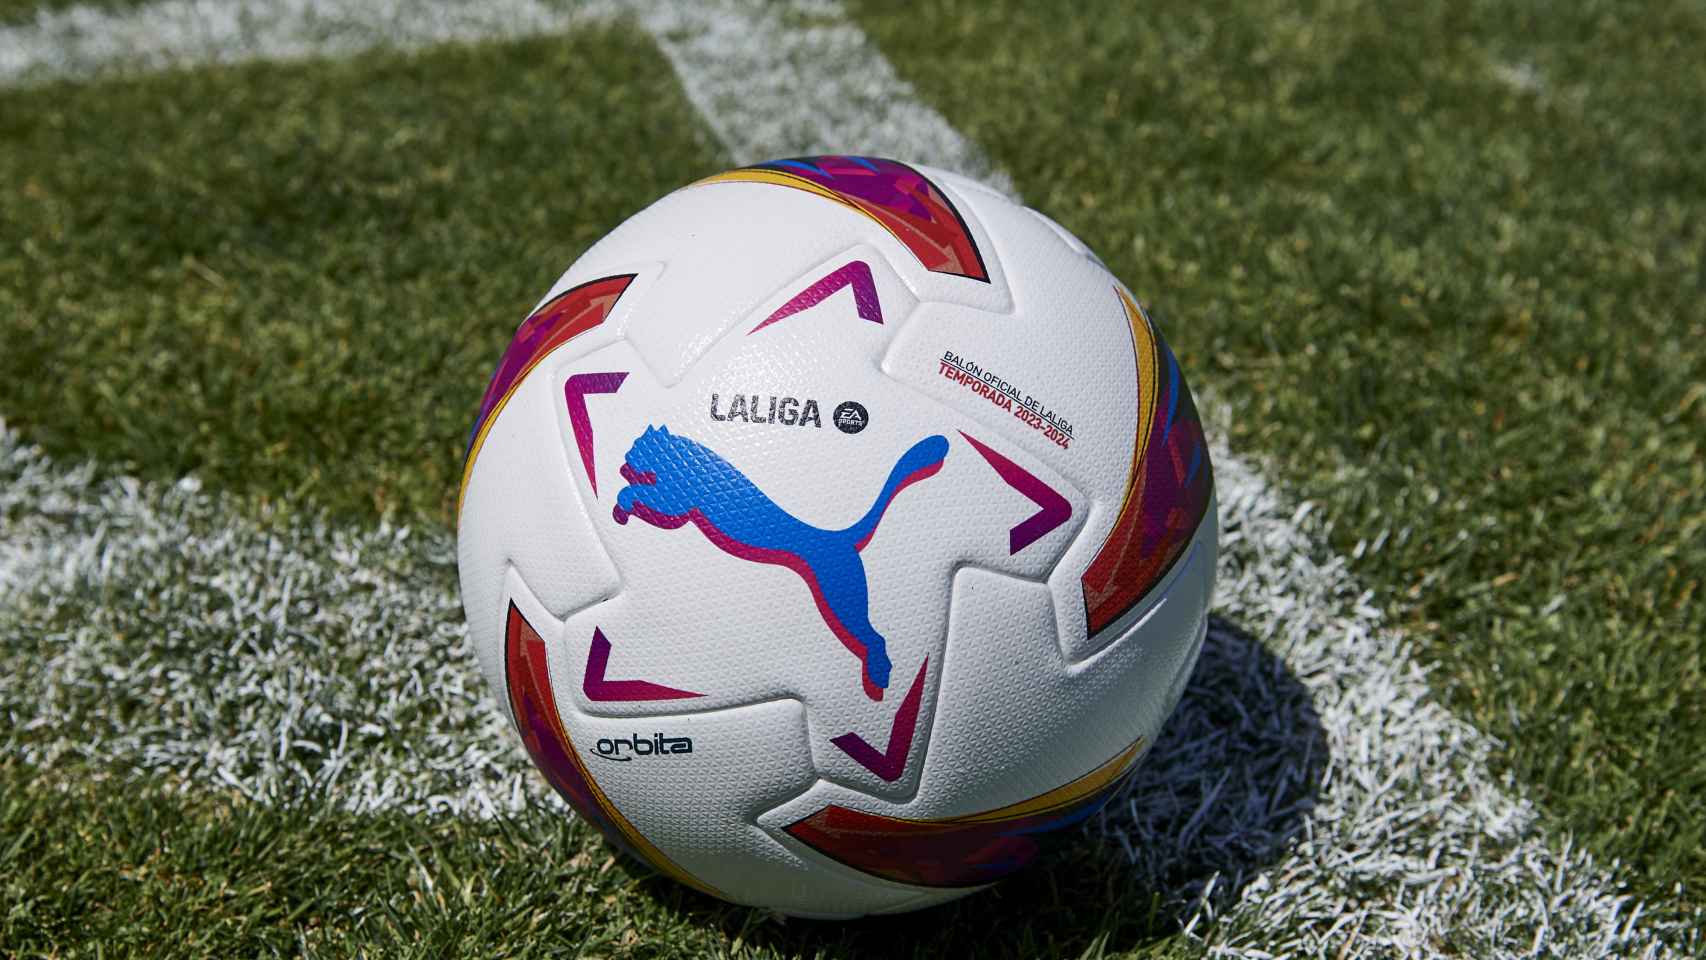 Puma Orbita La Liga 1 Pelota Calidad FIFA